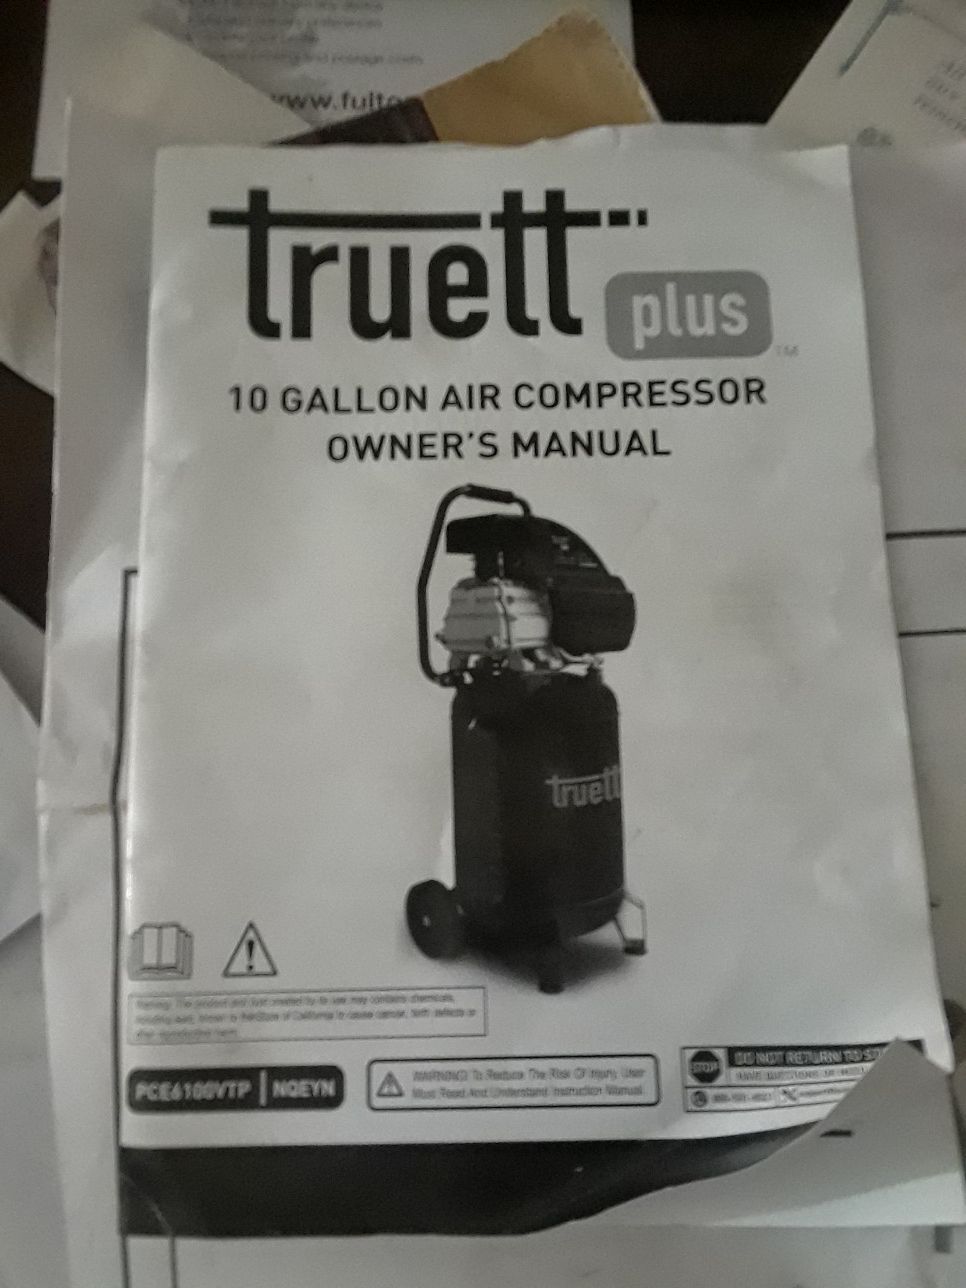 Truett plus 10 gallon vertical air compressor